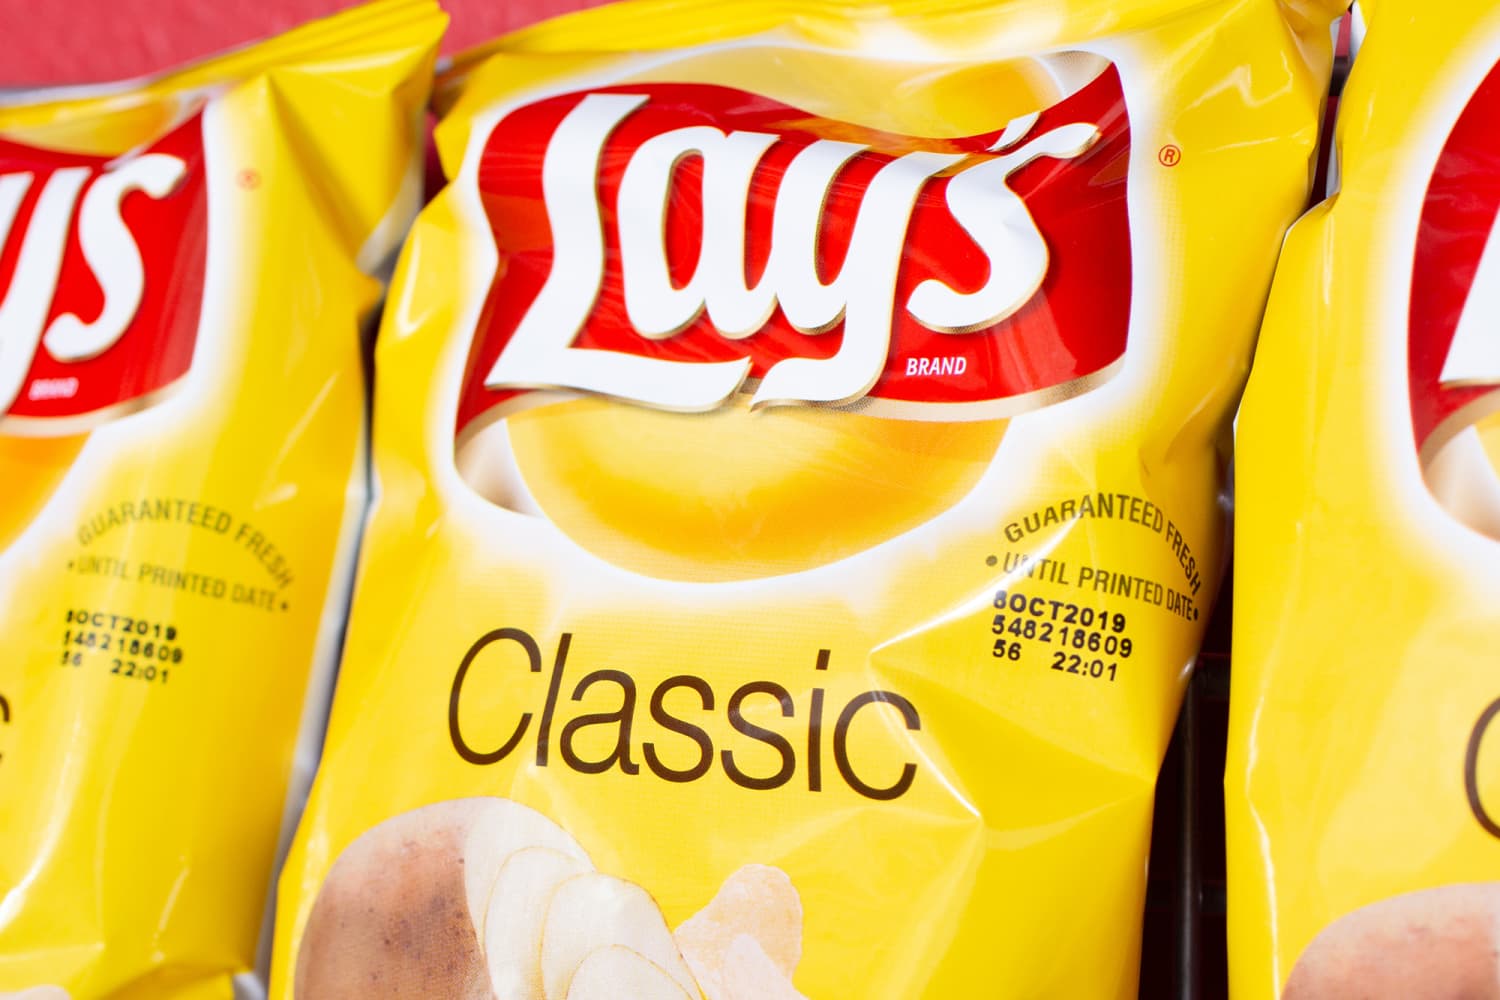  Lay's - Classic Potato Chips - 11 oz